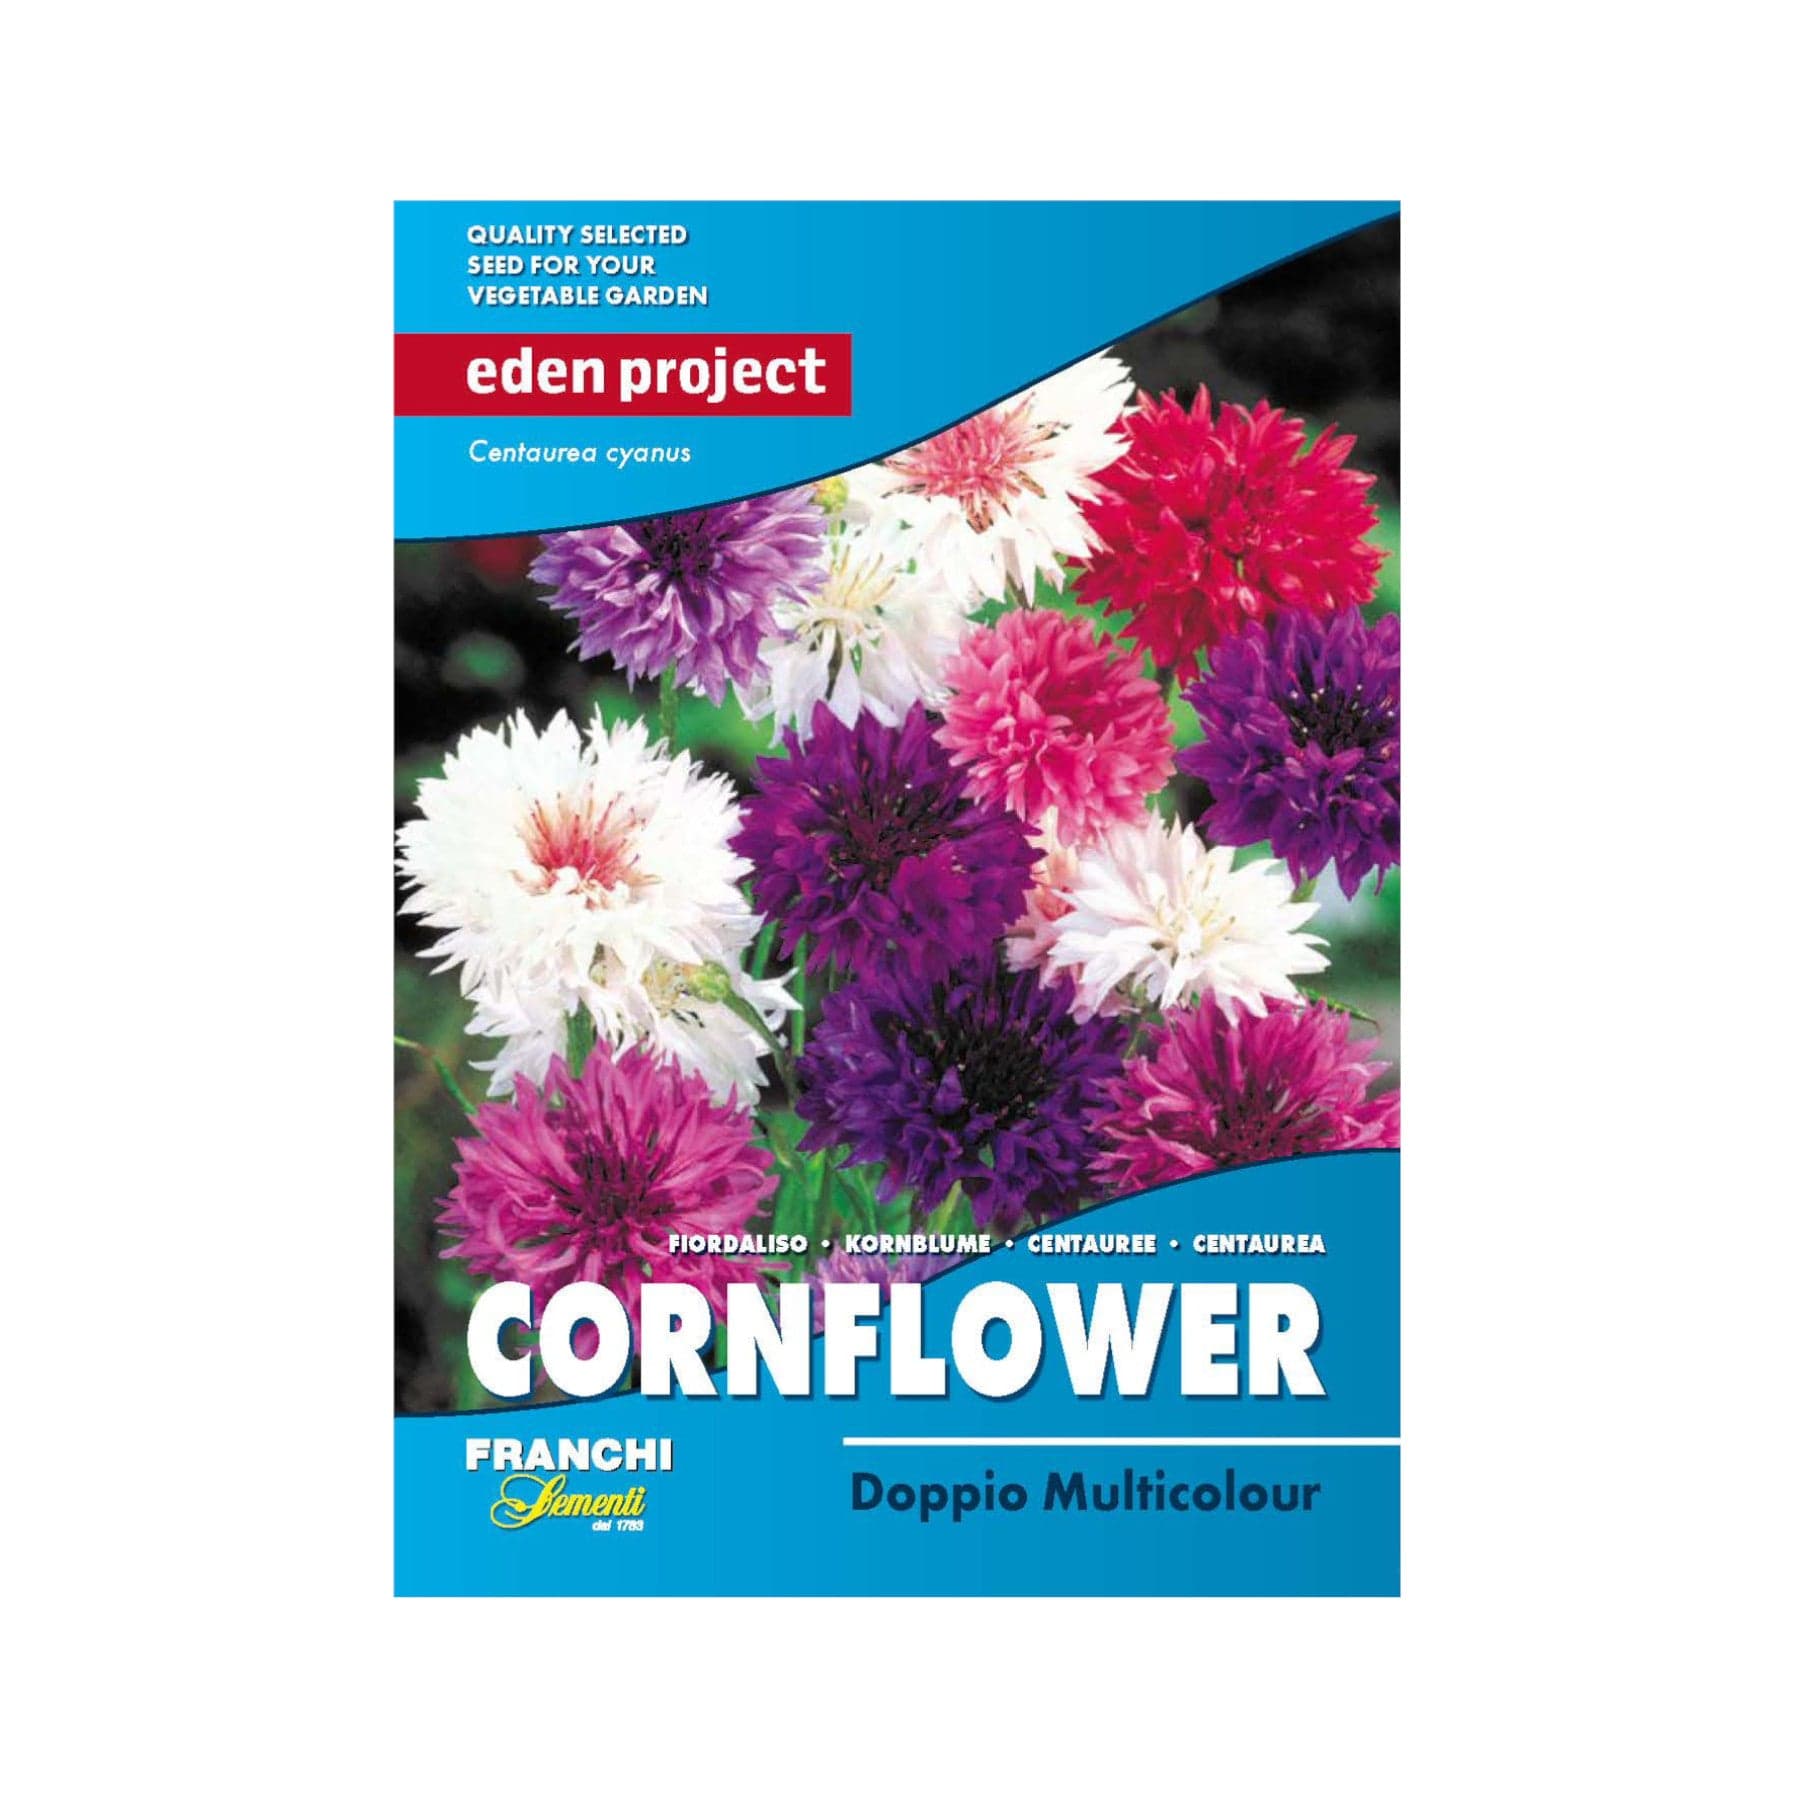 Cornflower multicolour seeds